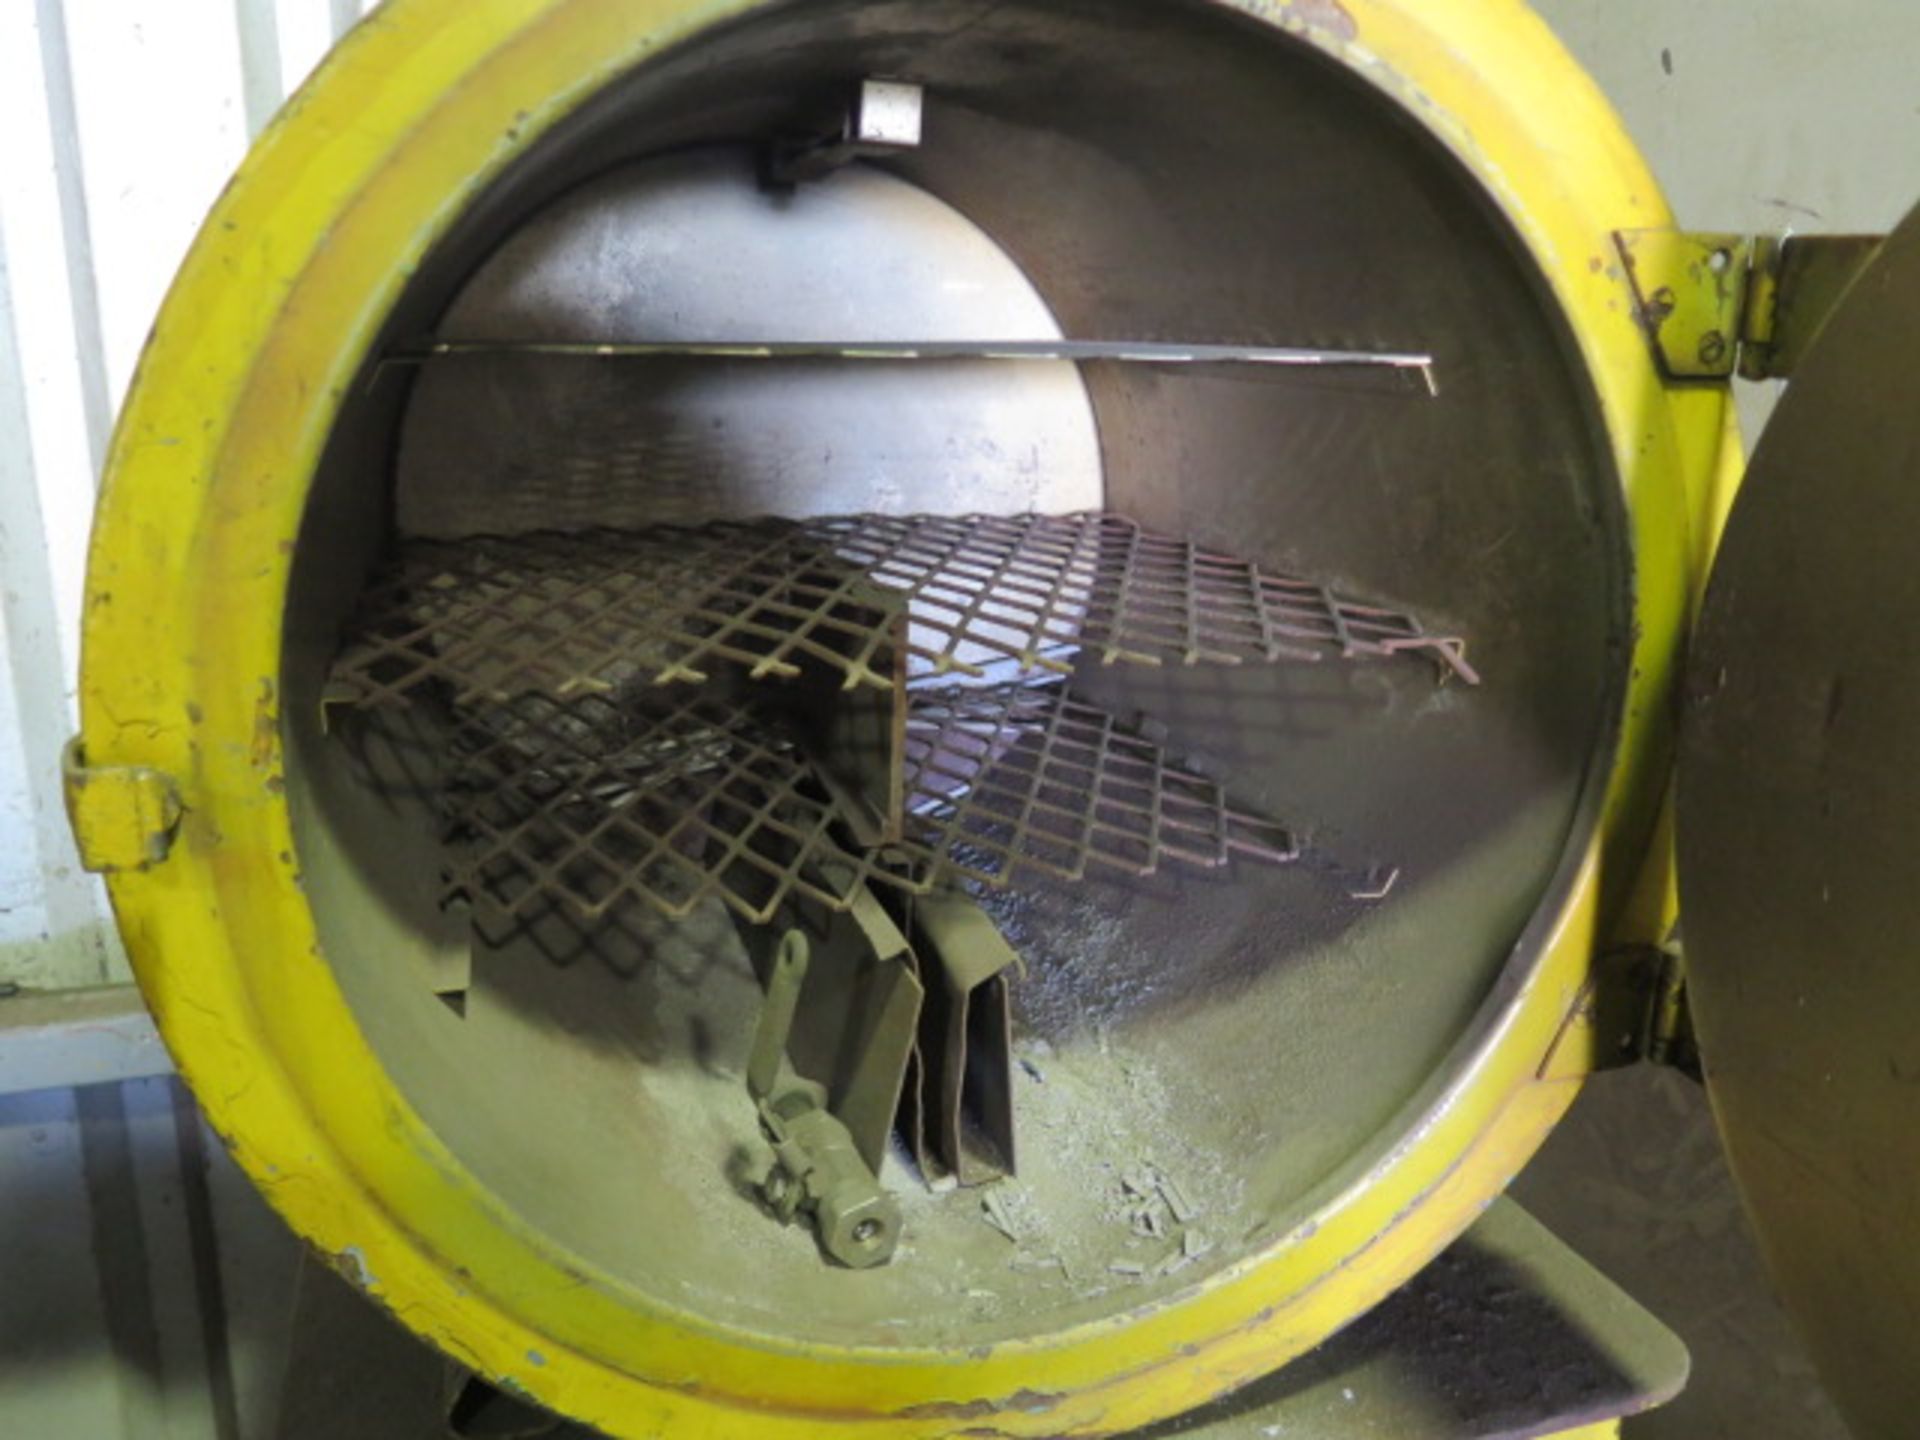 Phoenix DryRod mdl. PP-3 Electrode Stabilization Oven (SOLD AS-IS - NO WARRANTY) - Image 5 of 5